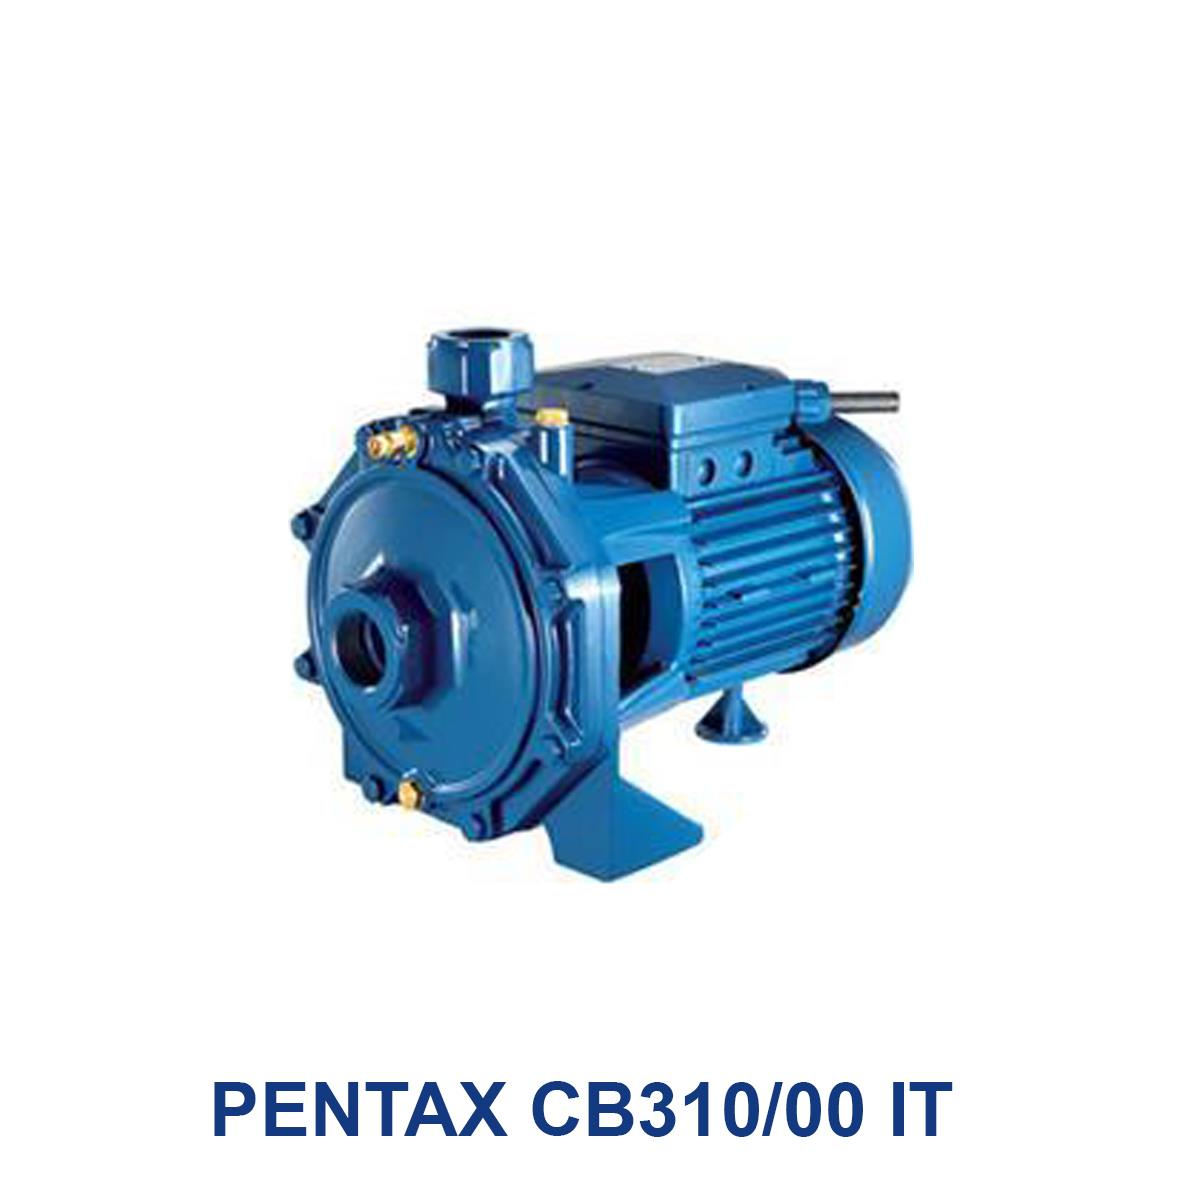 PENTAX-CB310-00-IT